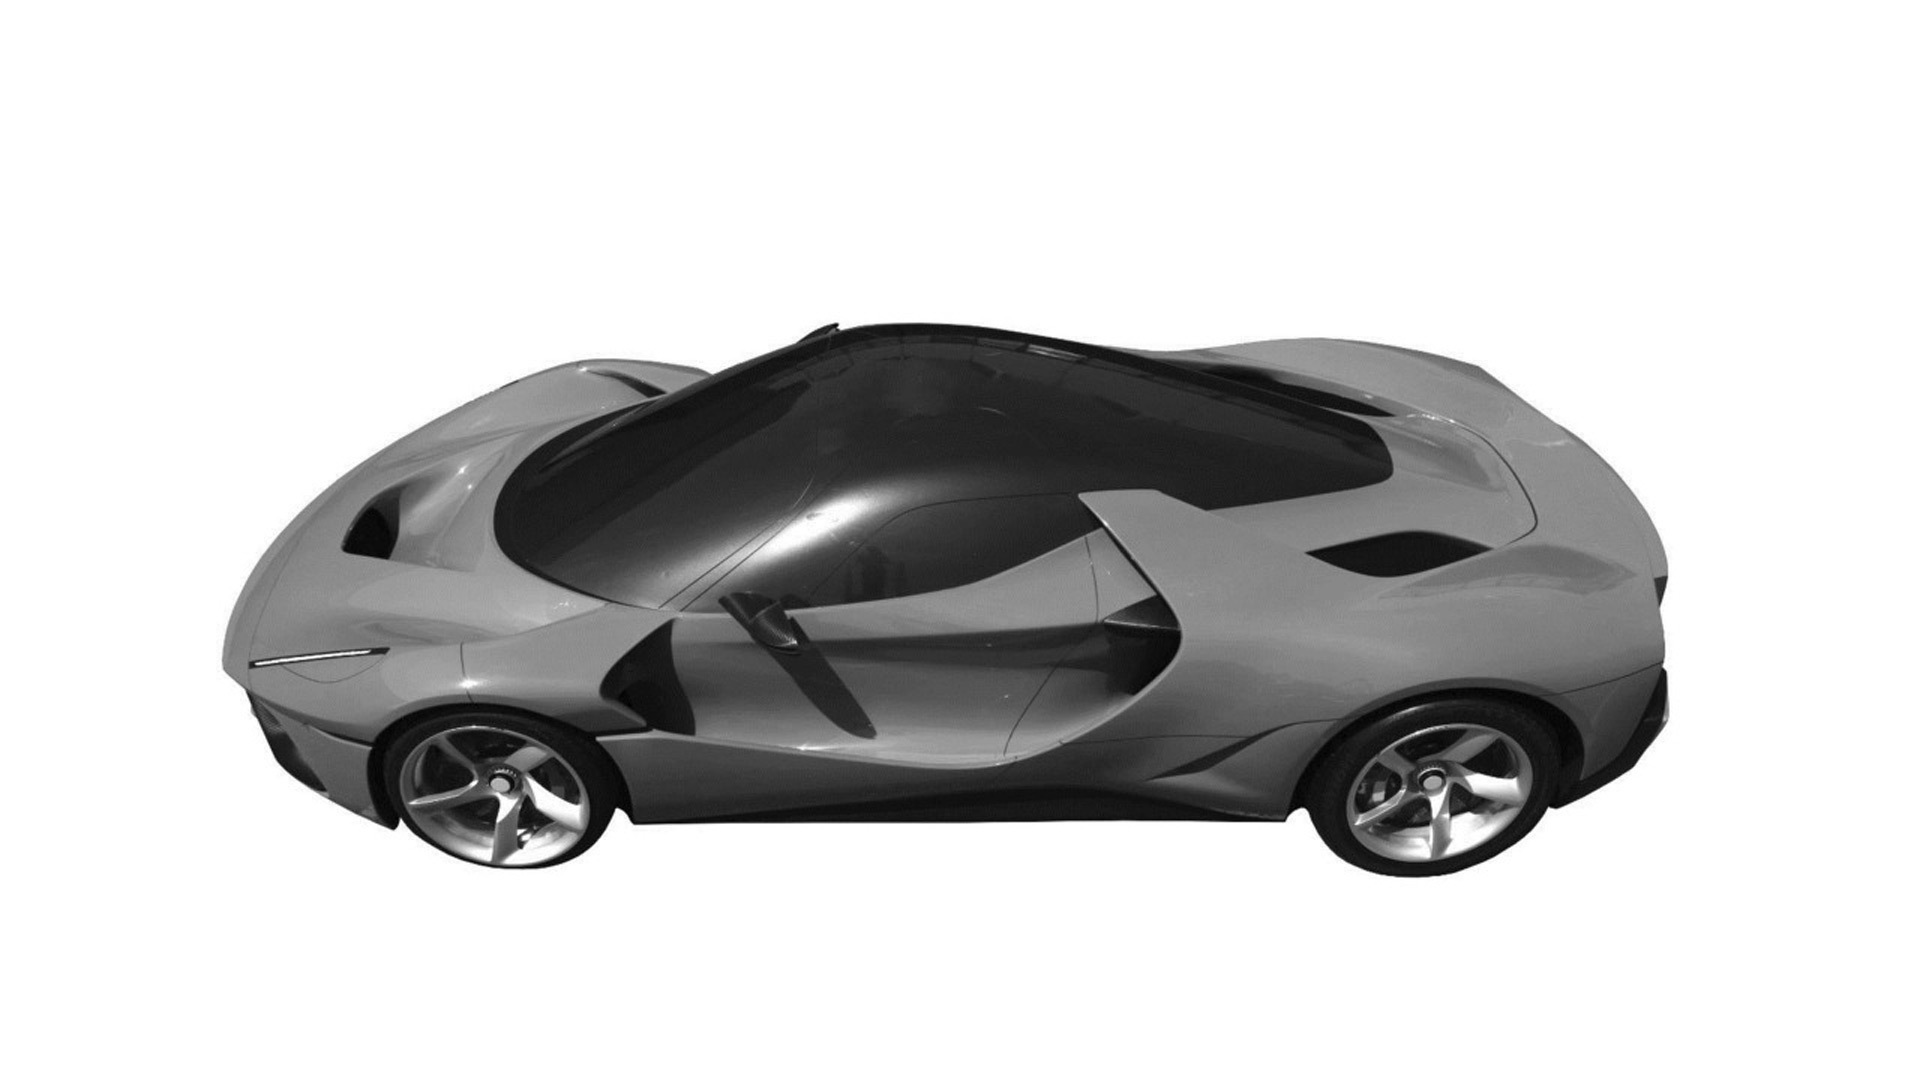 Patent drawings for Ferrari LaFerrari-based hypercar - Image via Motor1